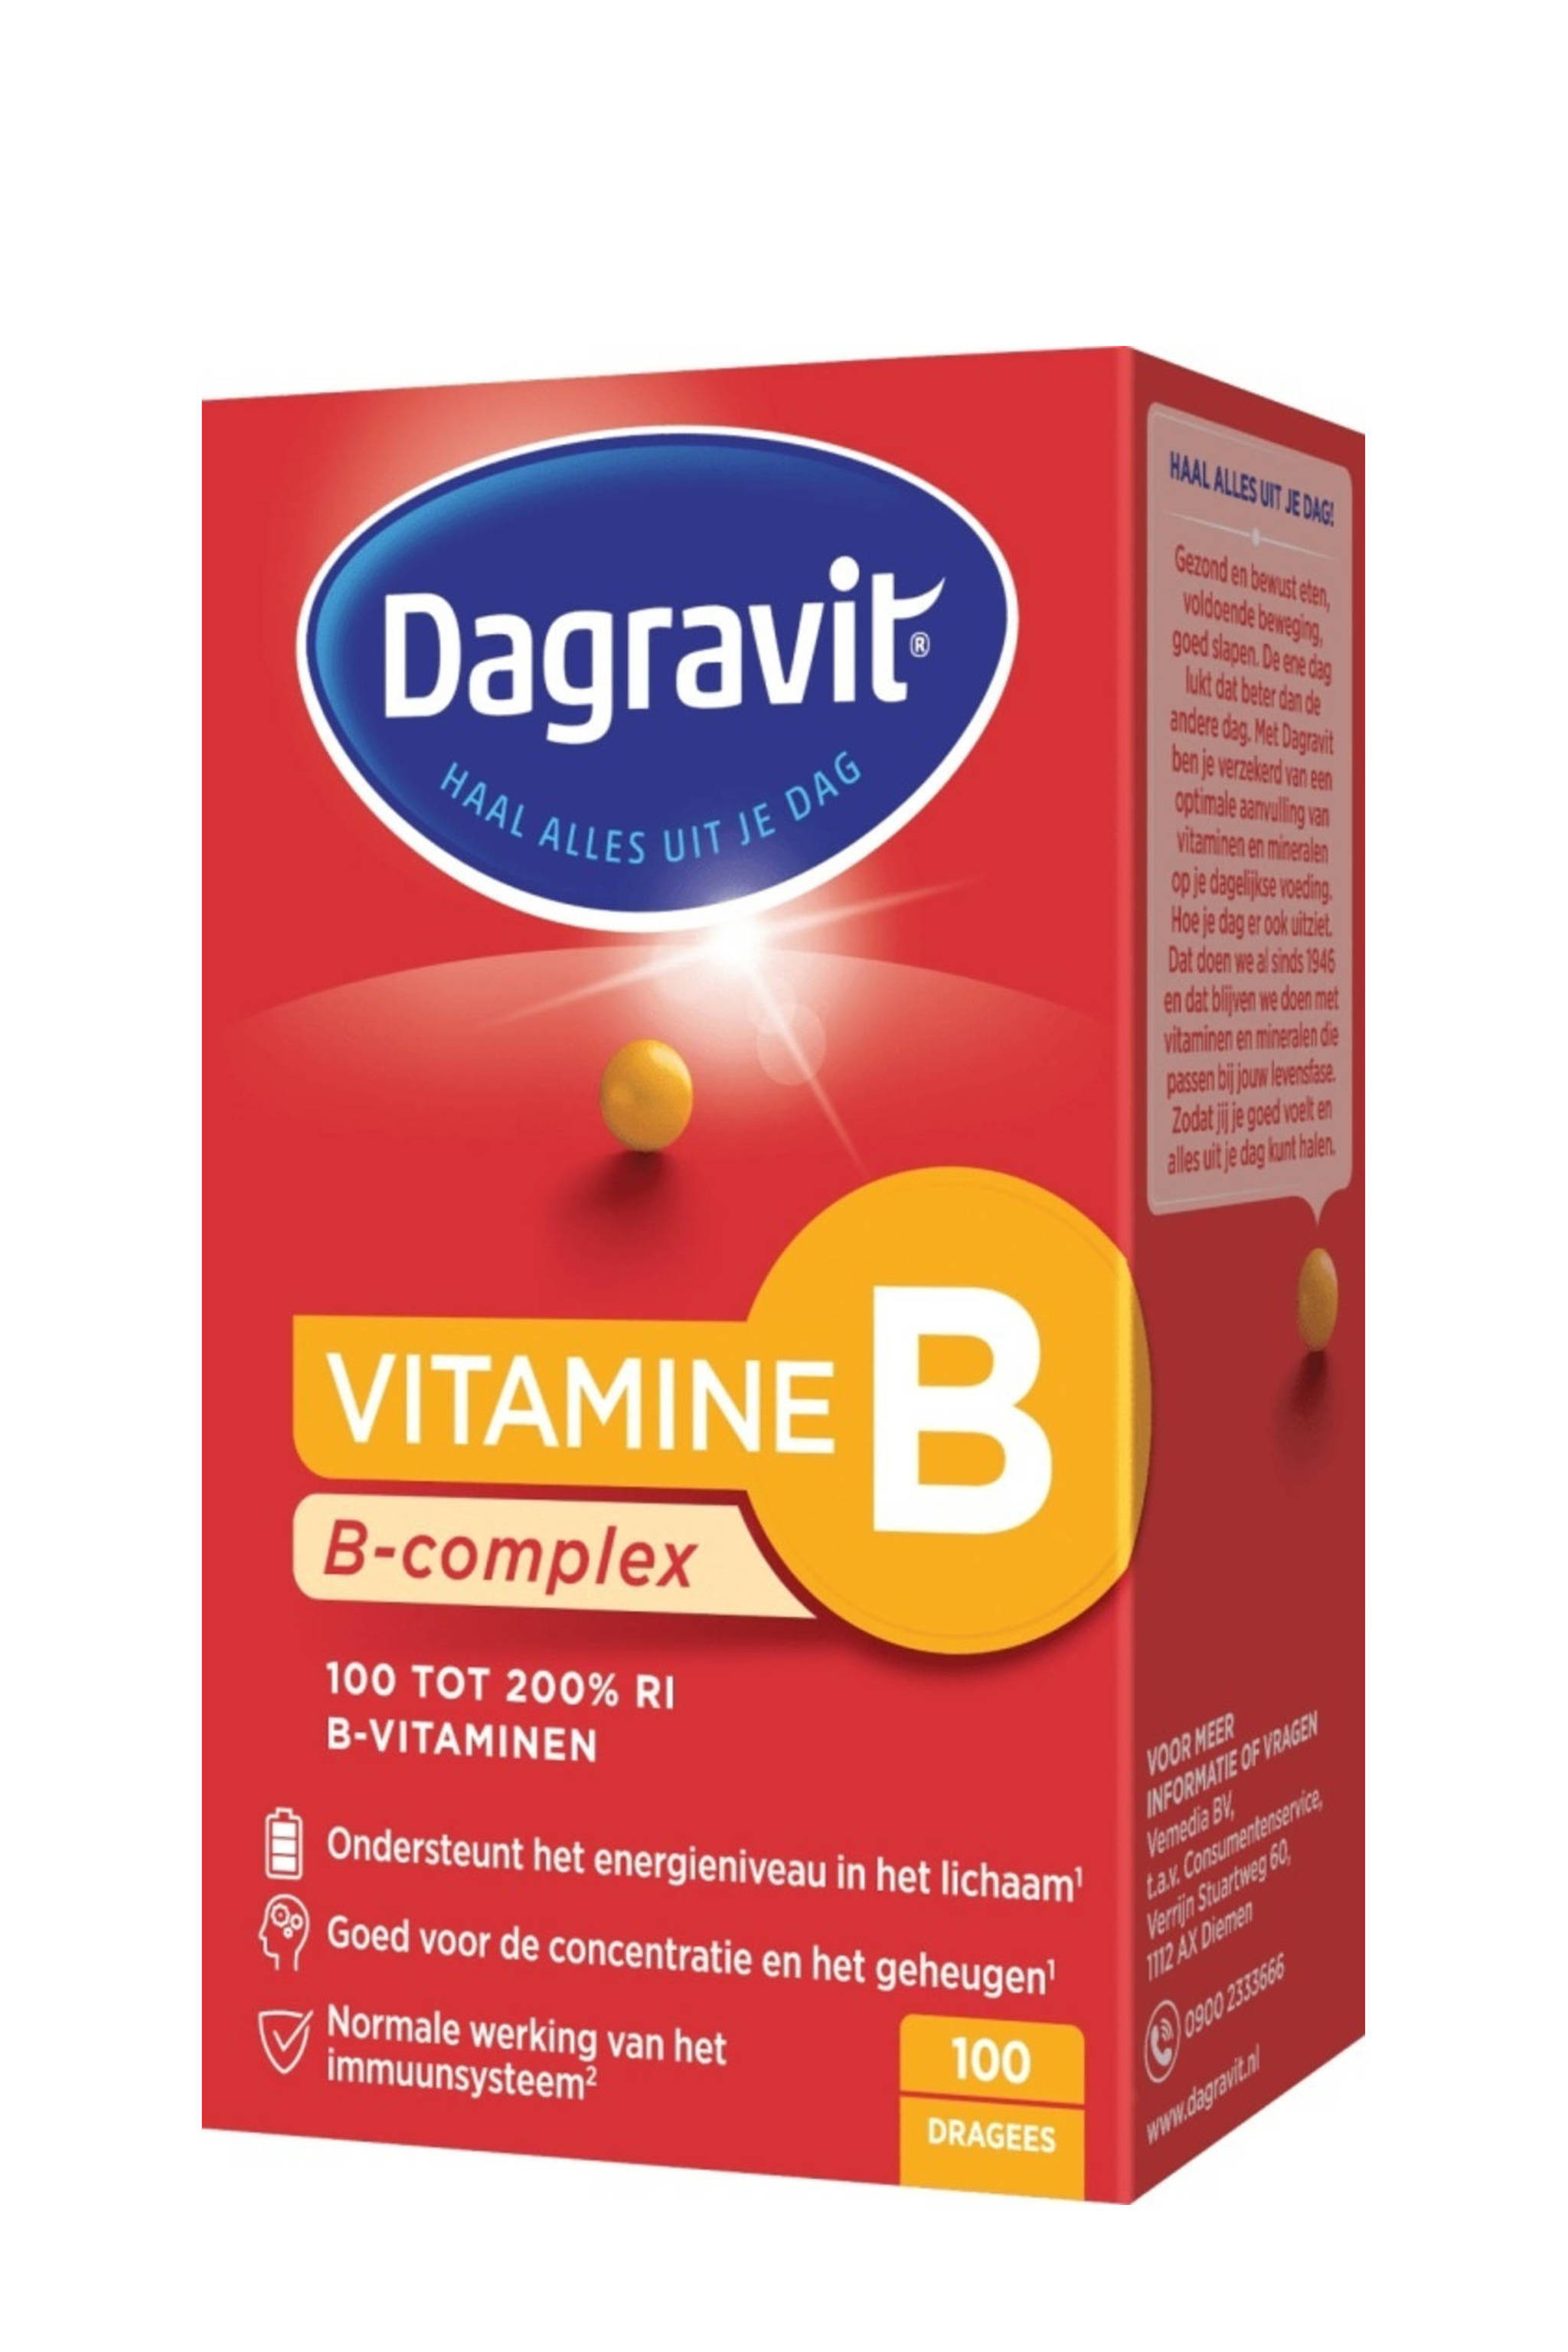 Medic Socialisme Slagschip Dagravit Vitamine B- complex - 100 stuks | wehkamp